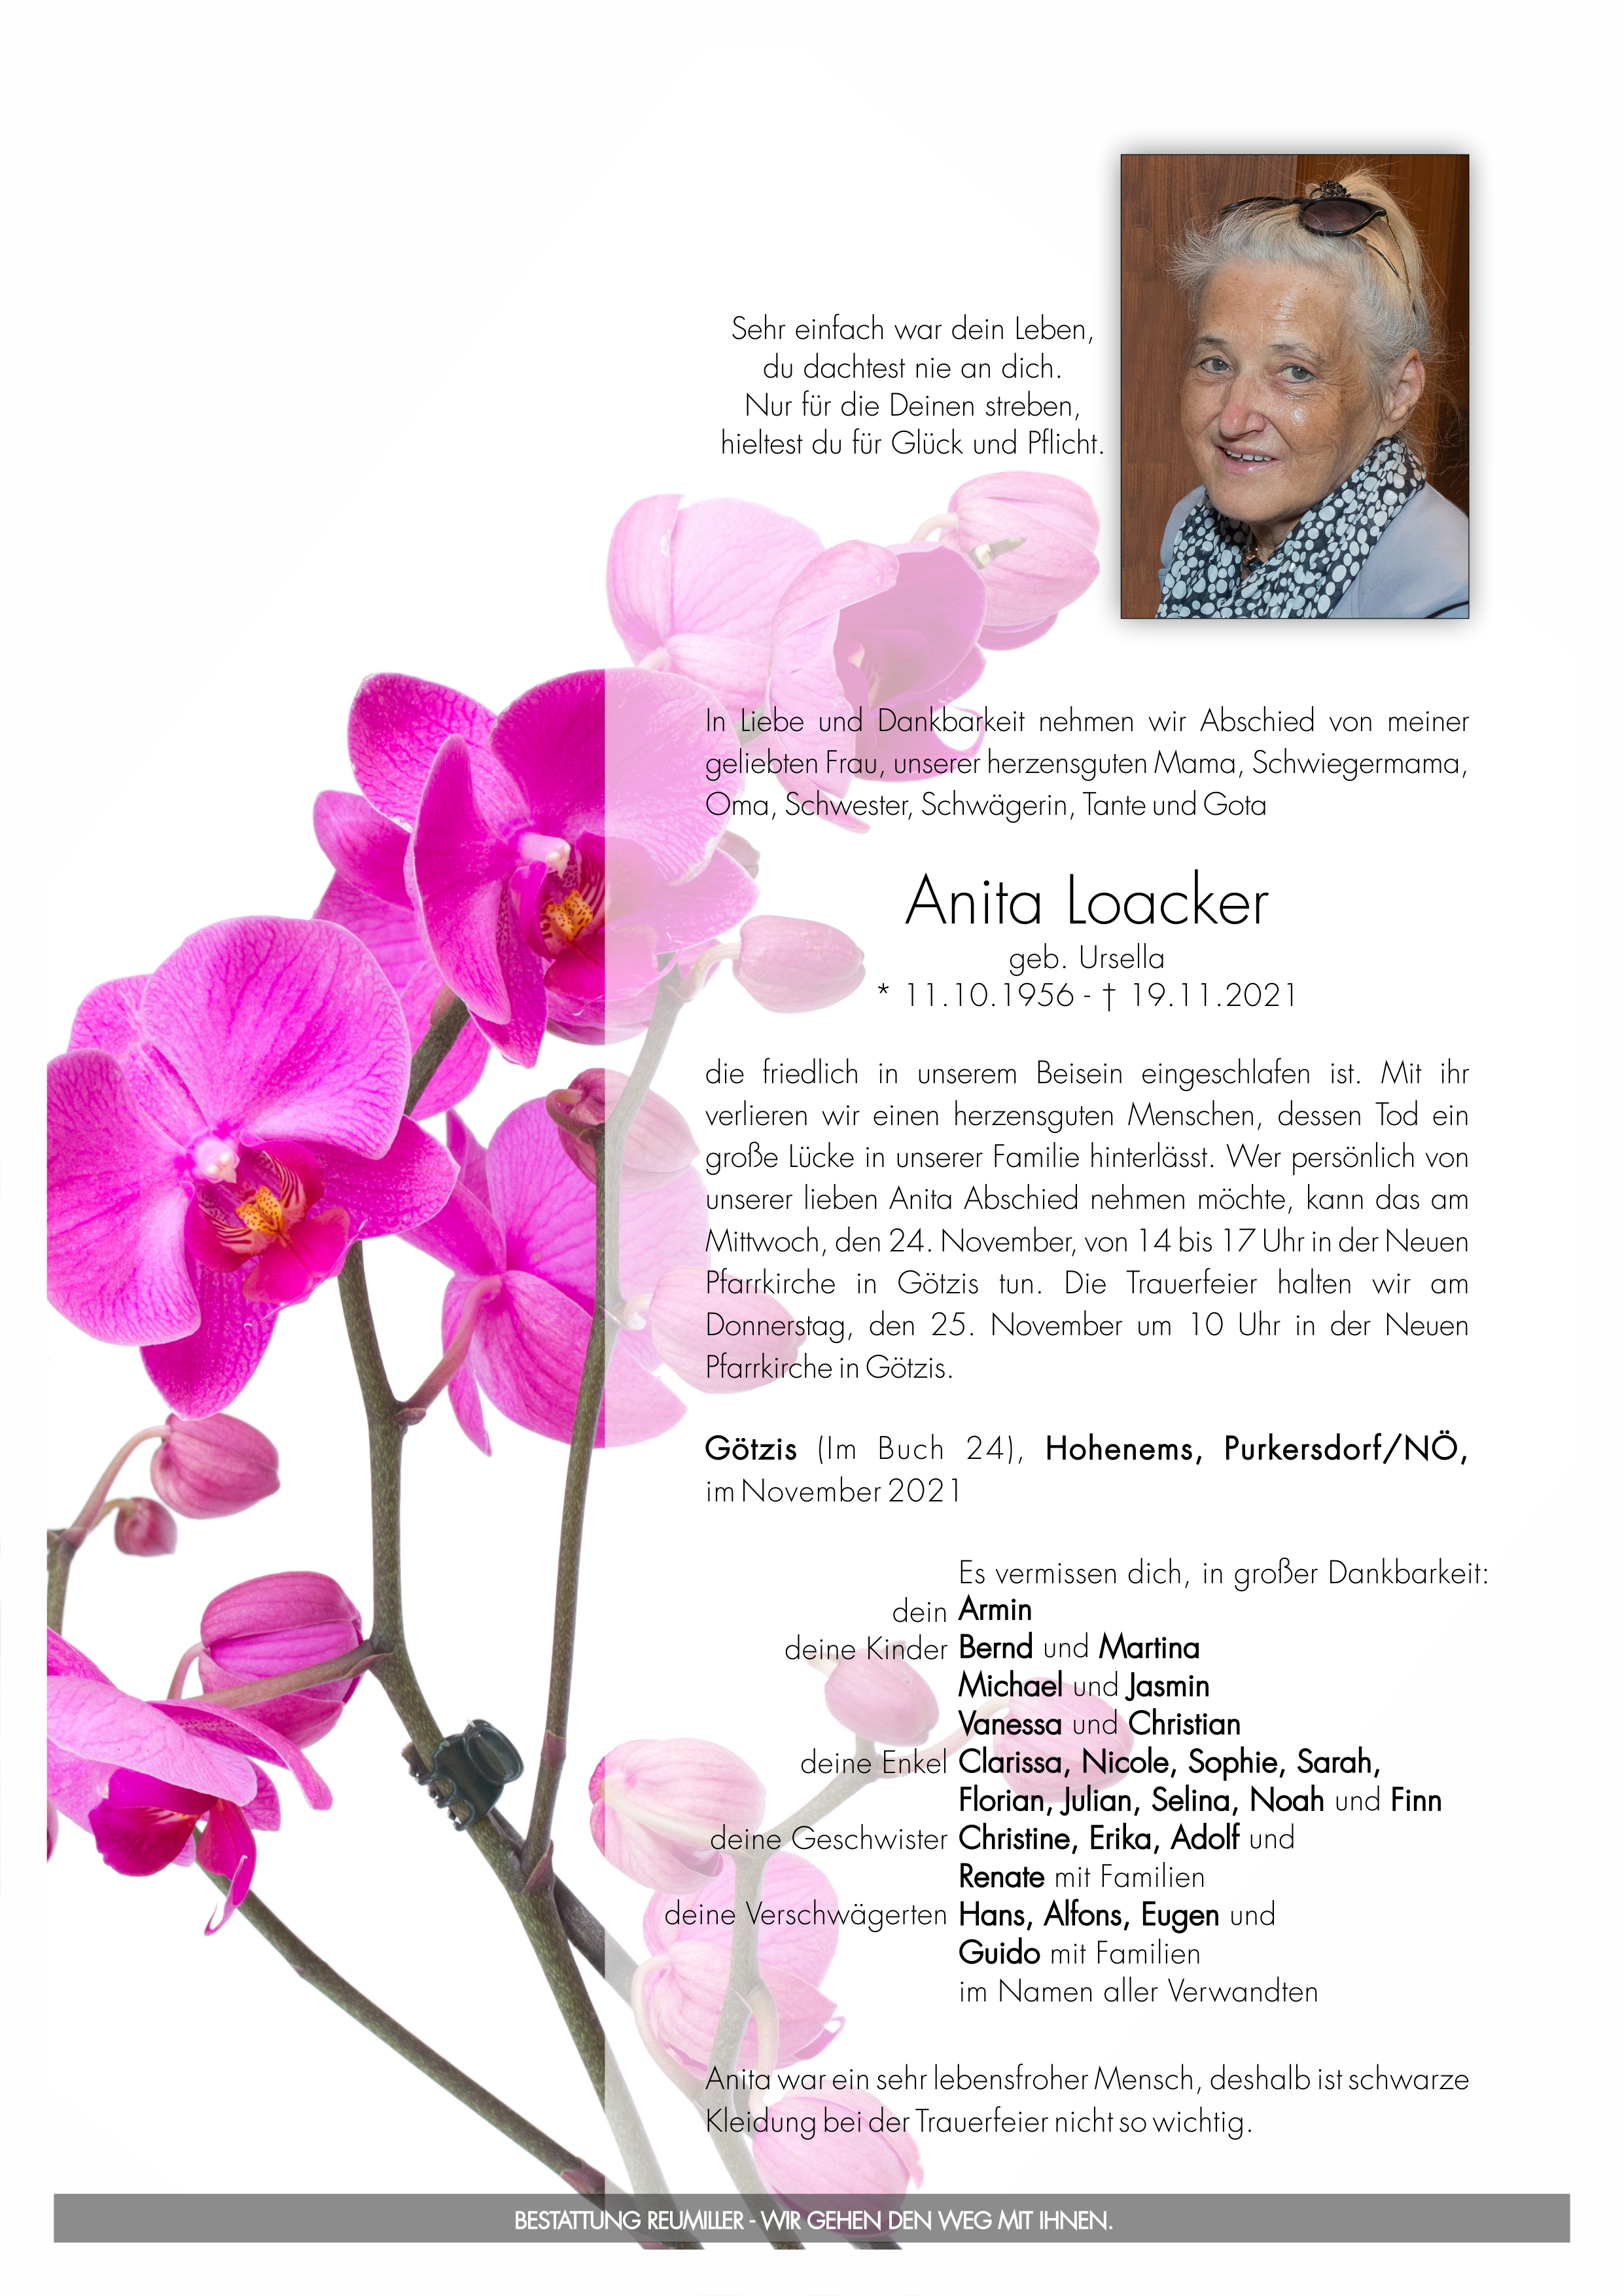 Anita Loacker